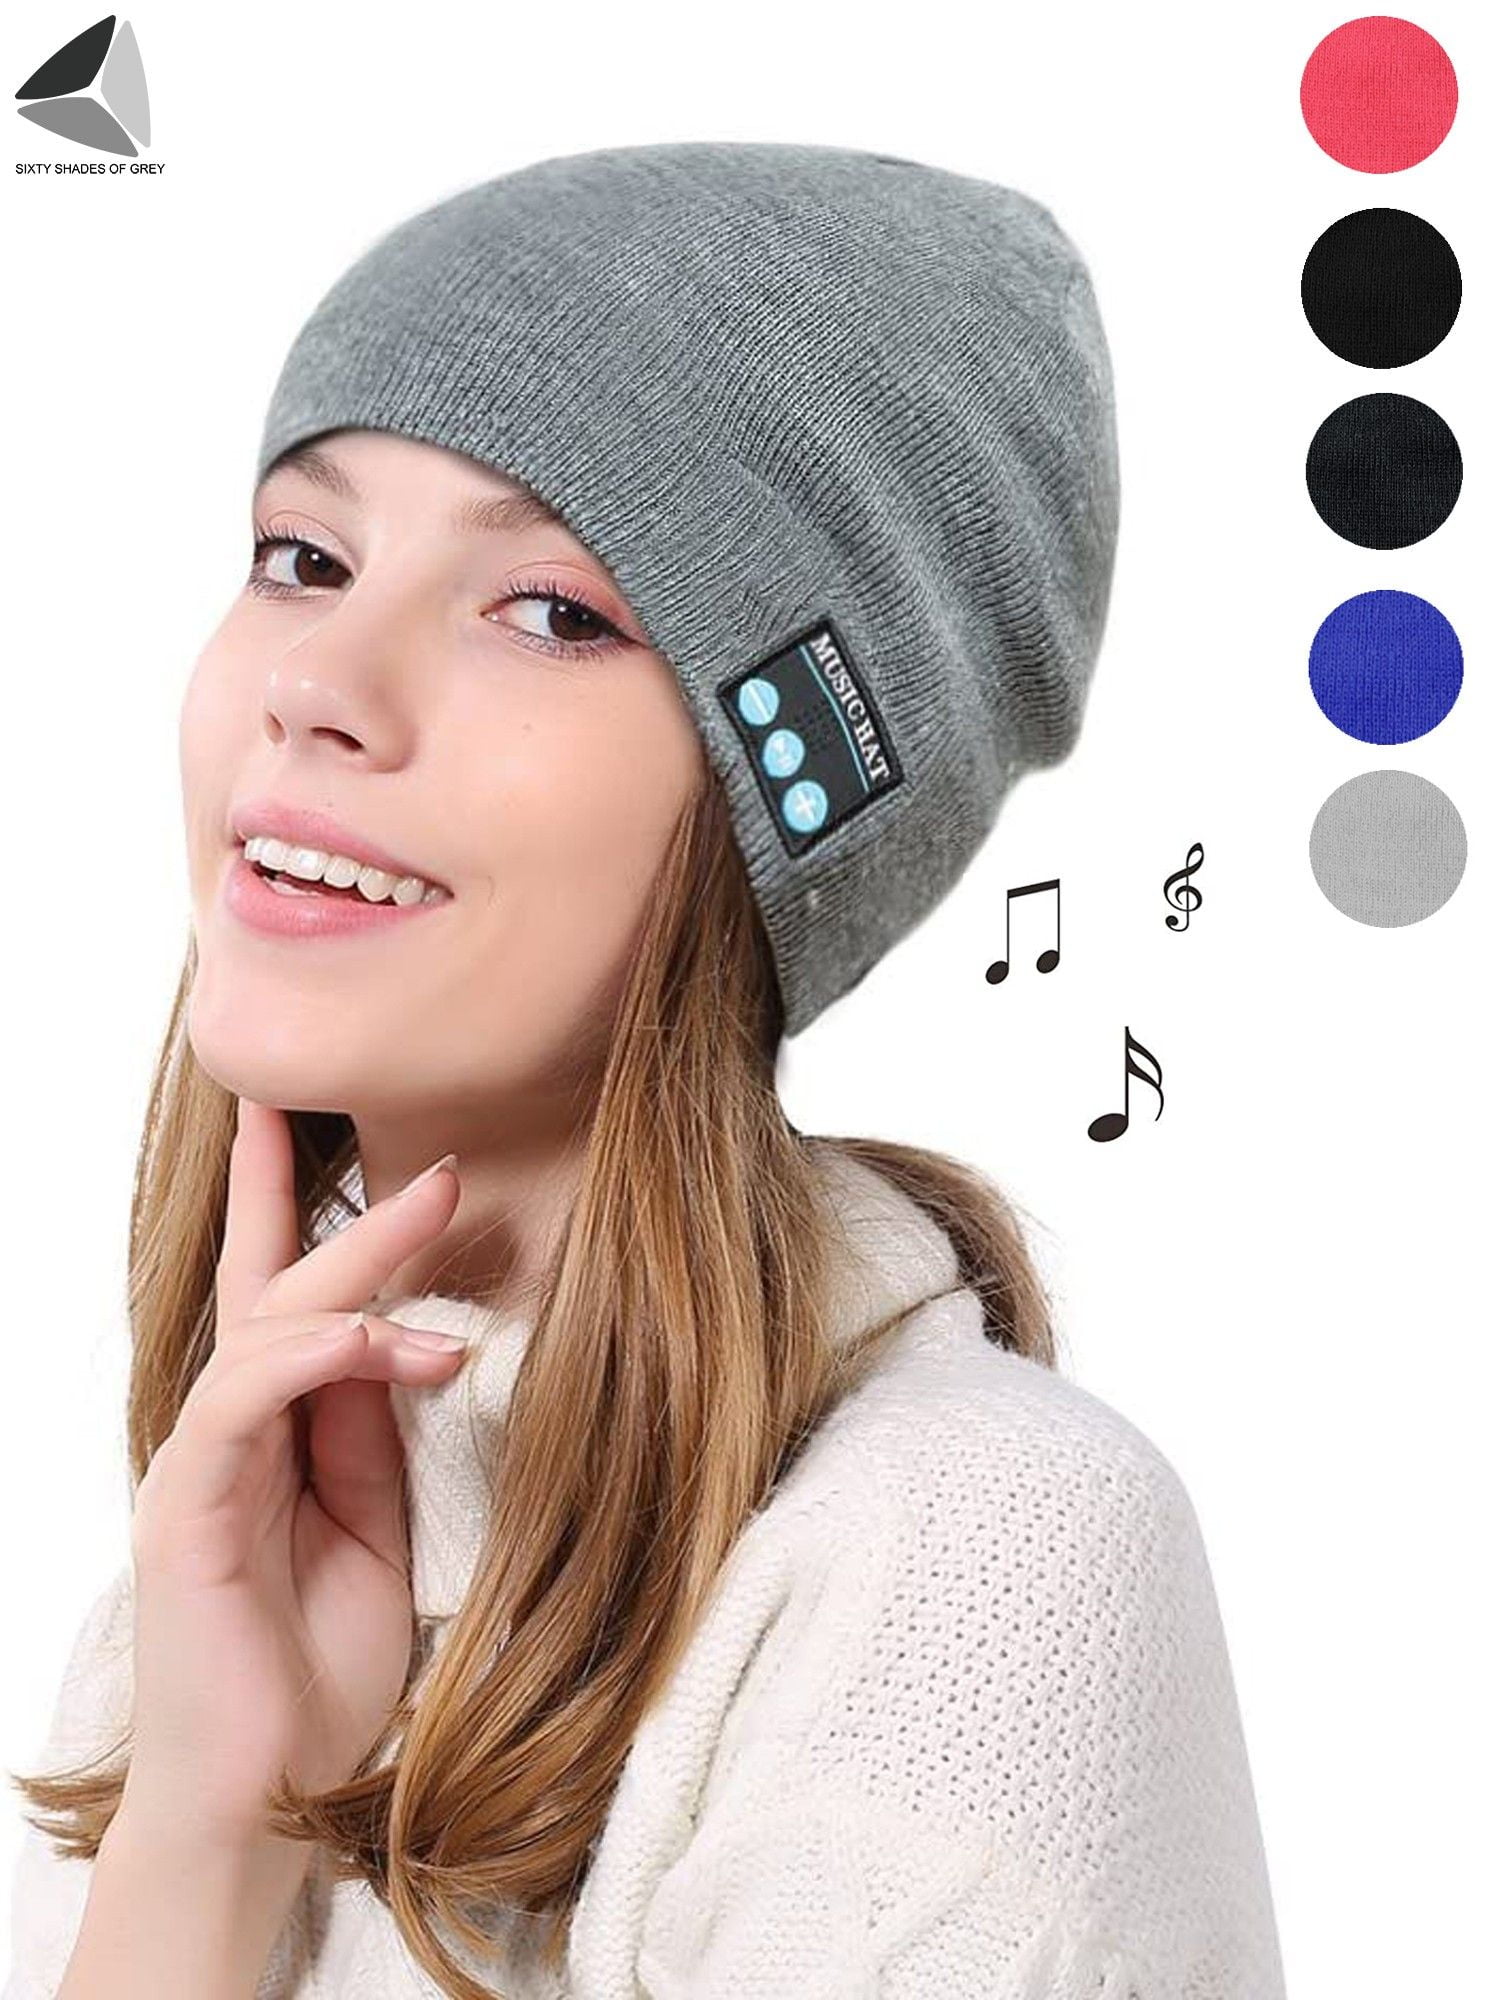 Awatty Bluetooth Beanie Hat V5.0 with Speakers Wireless Music Headset Winter Knit Running Cap Washable Bluetooth Stereo Headphone for Men Women Mom Her Teens Boys Girls Black